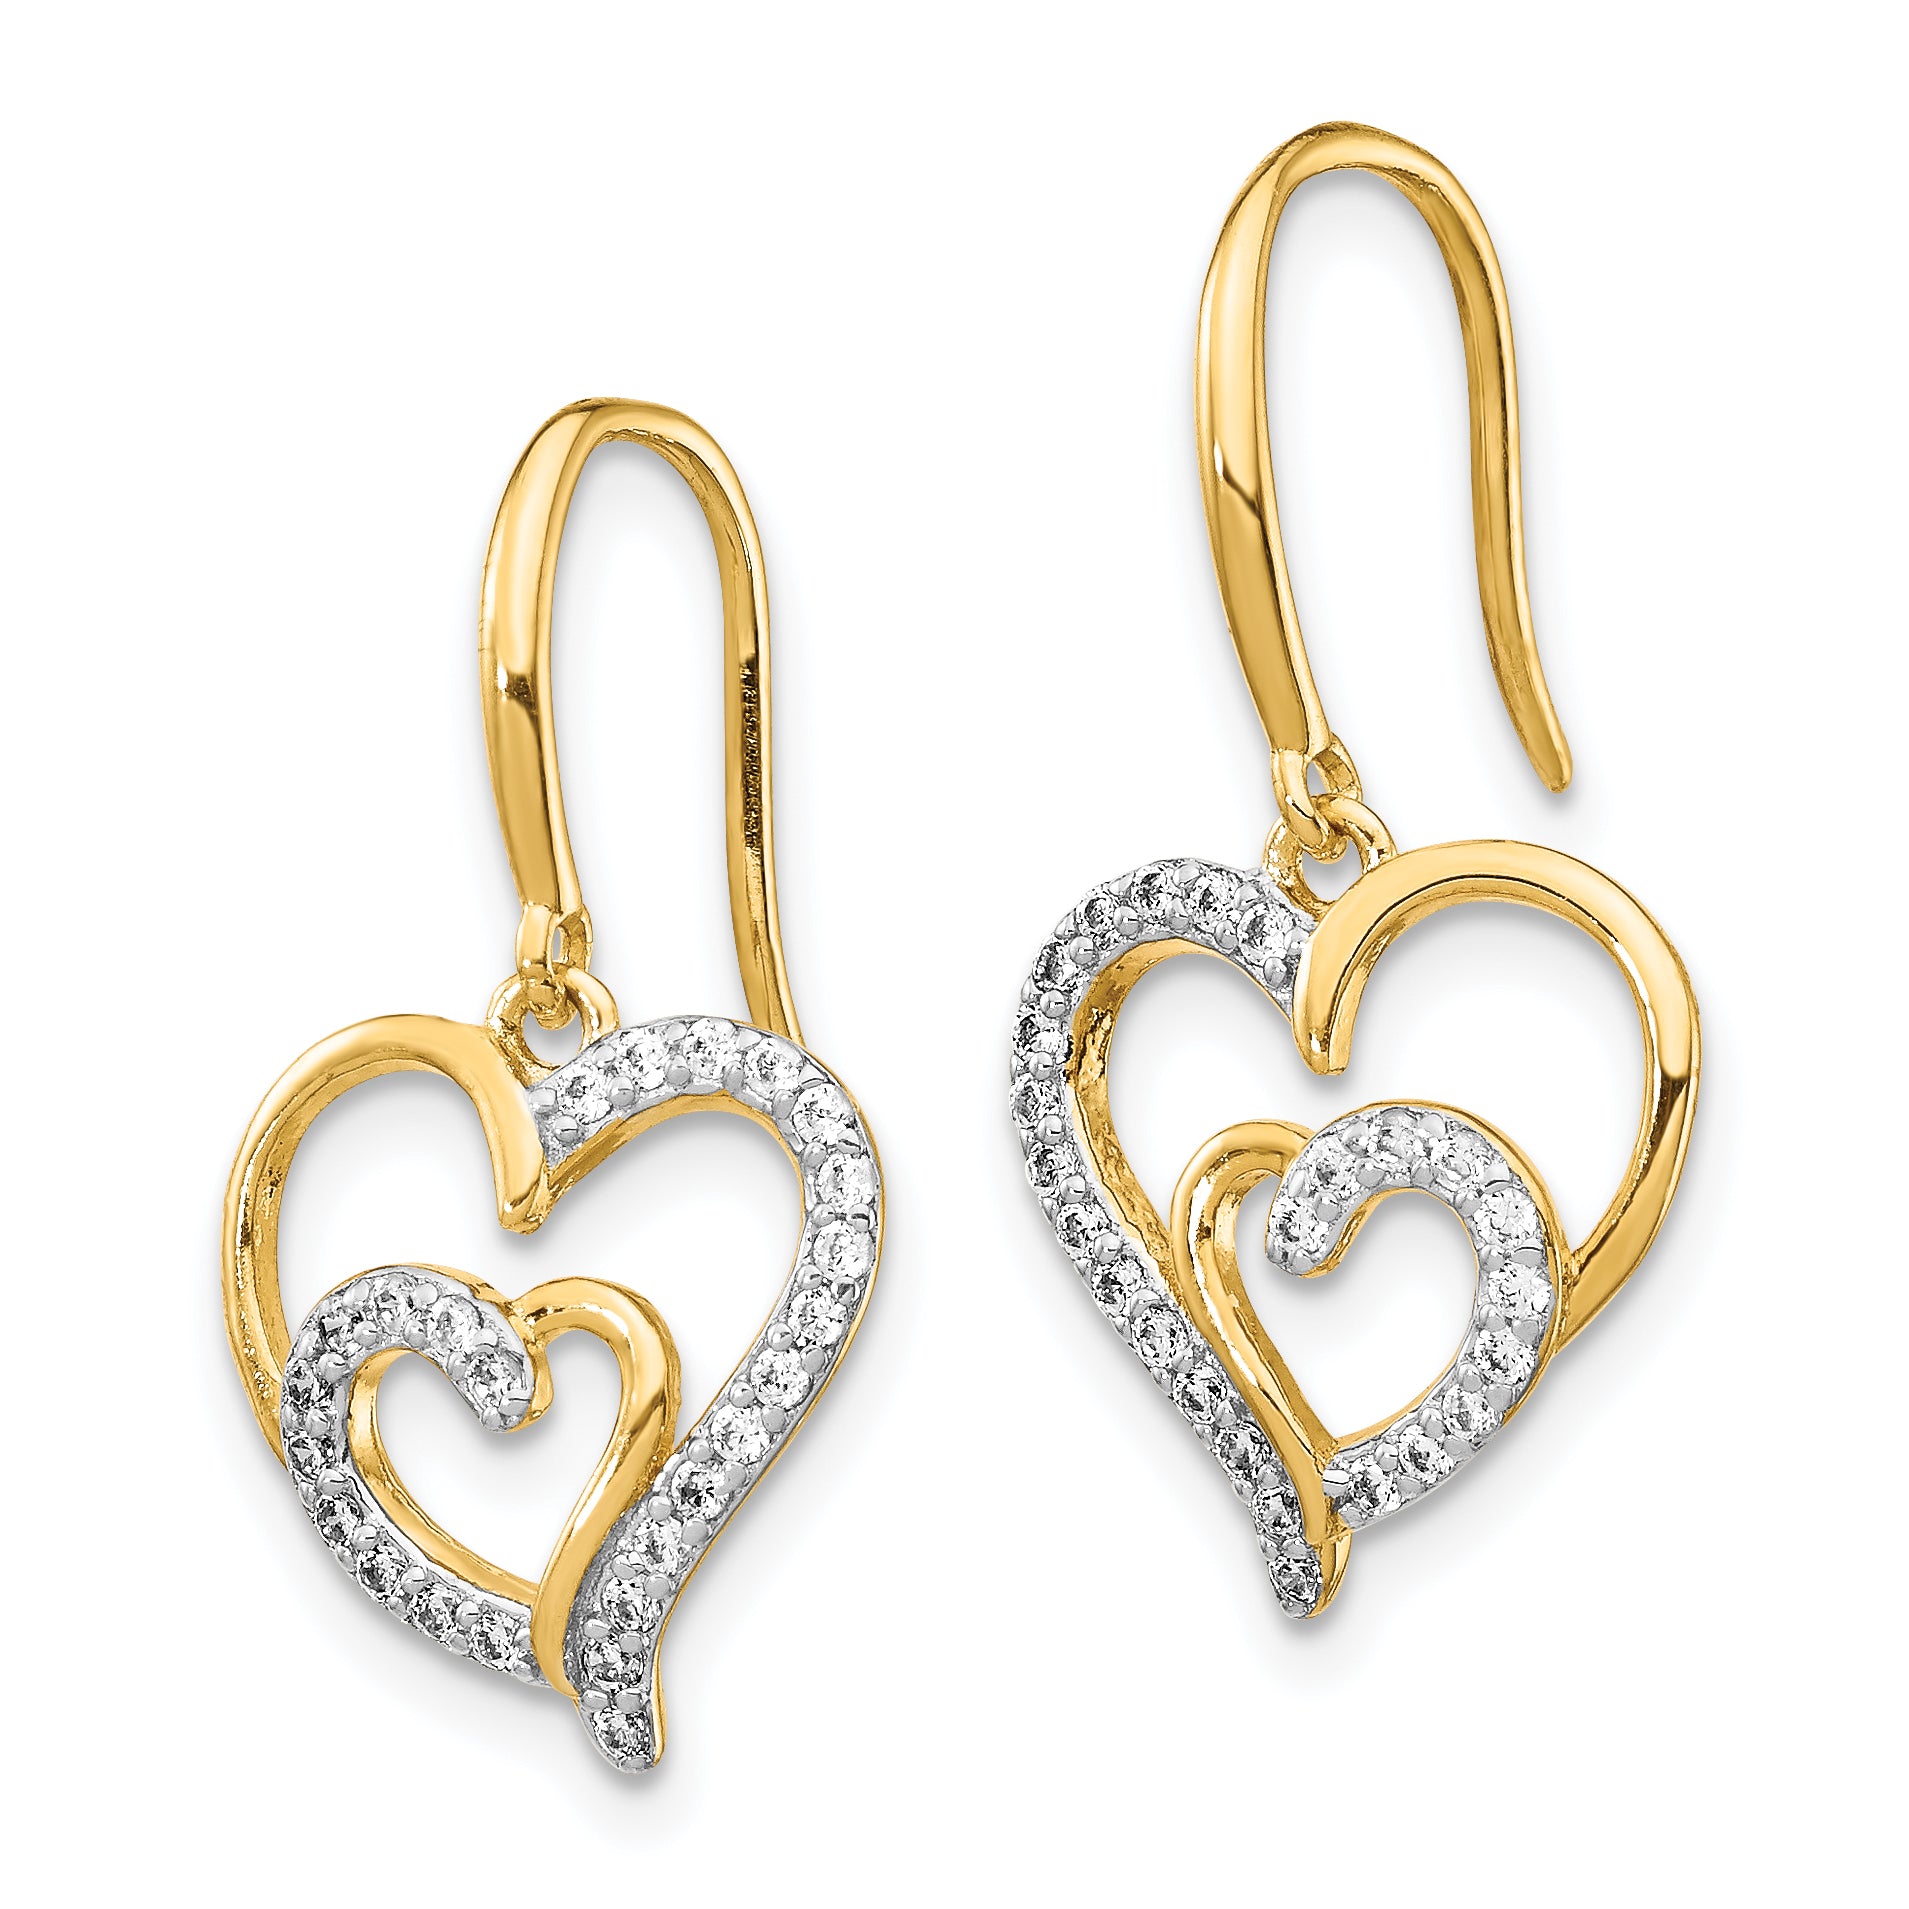 Cheryl M Sterling Silver Gold-plated Brilliant-cut CZ Heart Dangle Earrings